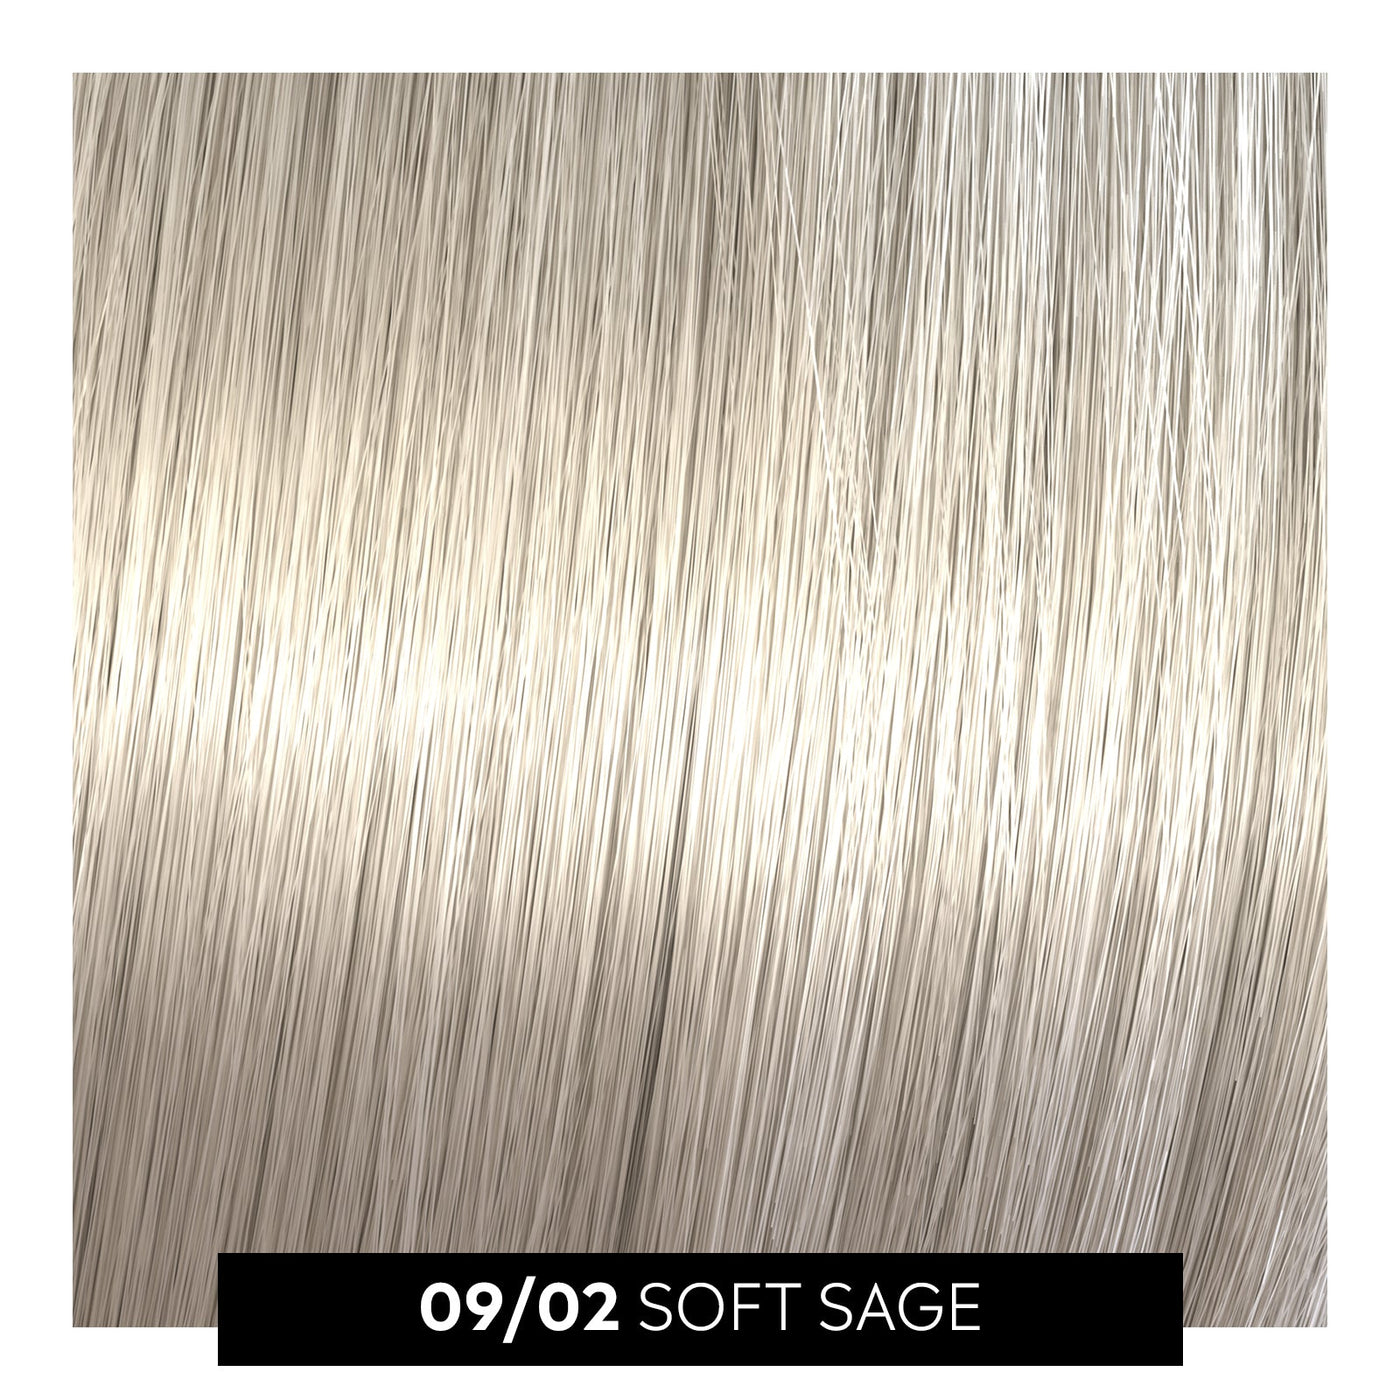 09/02 soft sage